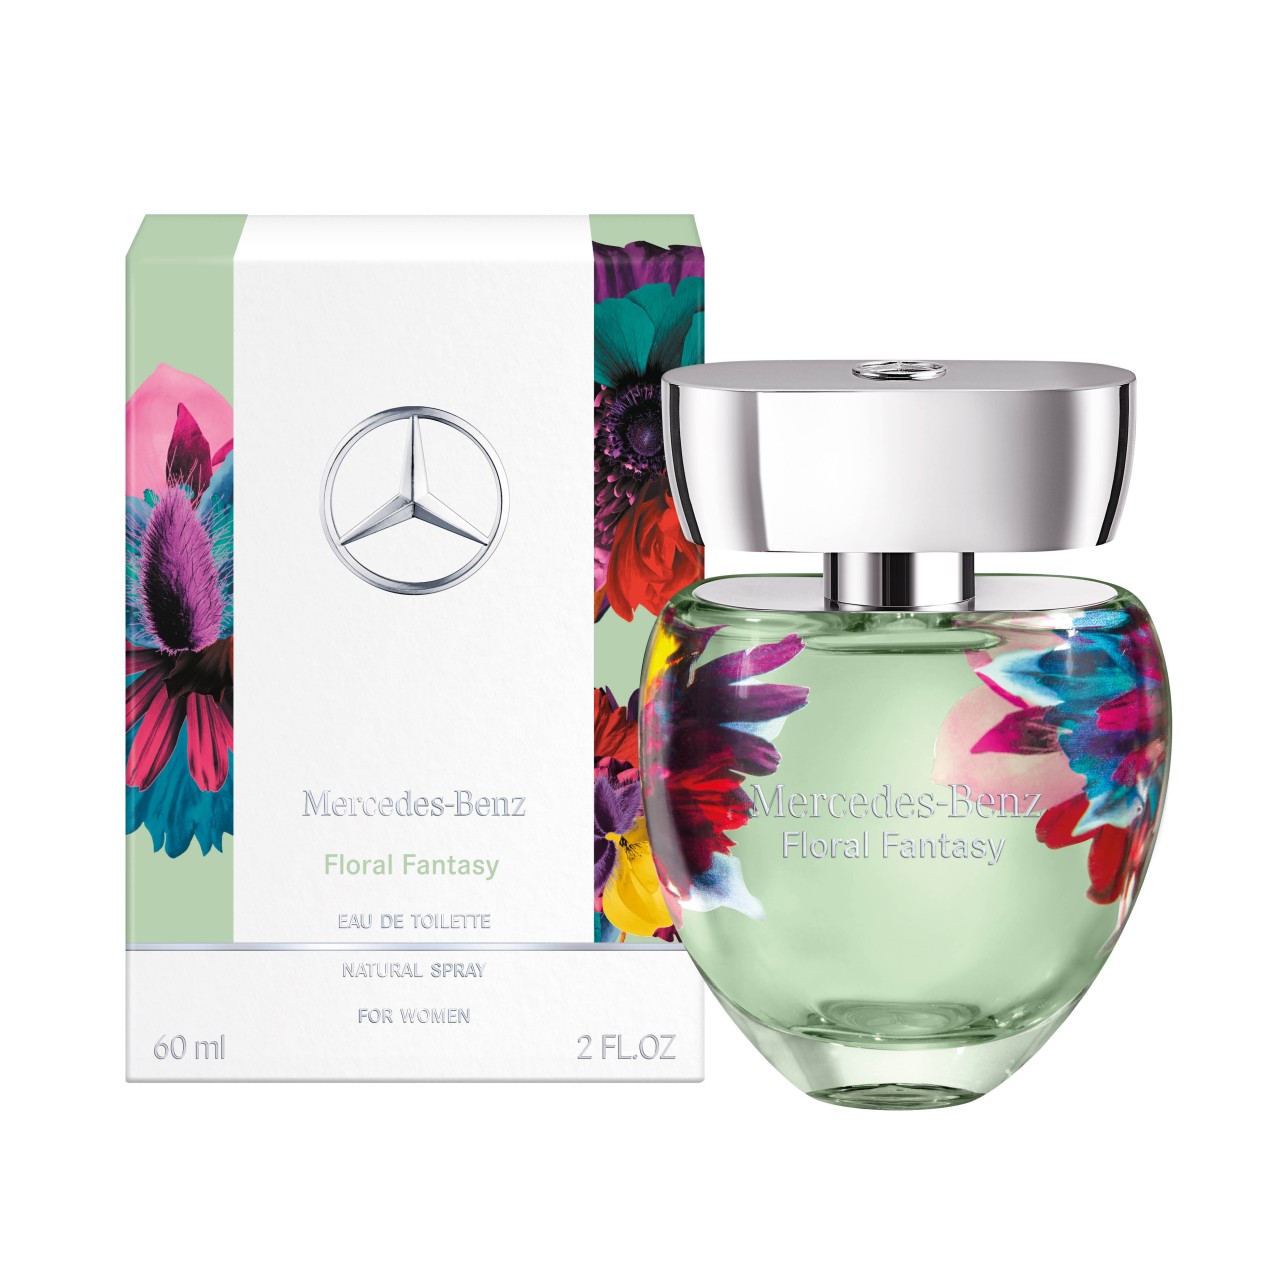 Mercedes-Benz Perfume Floral Fantasy EdT Toaletní Voda (EdT) 60 ml